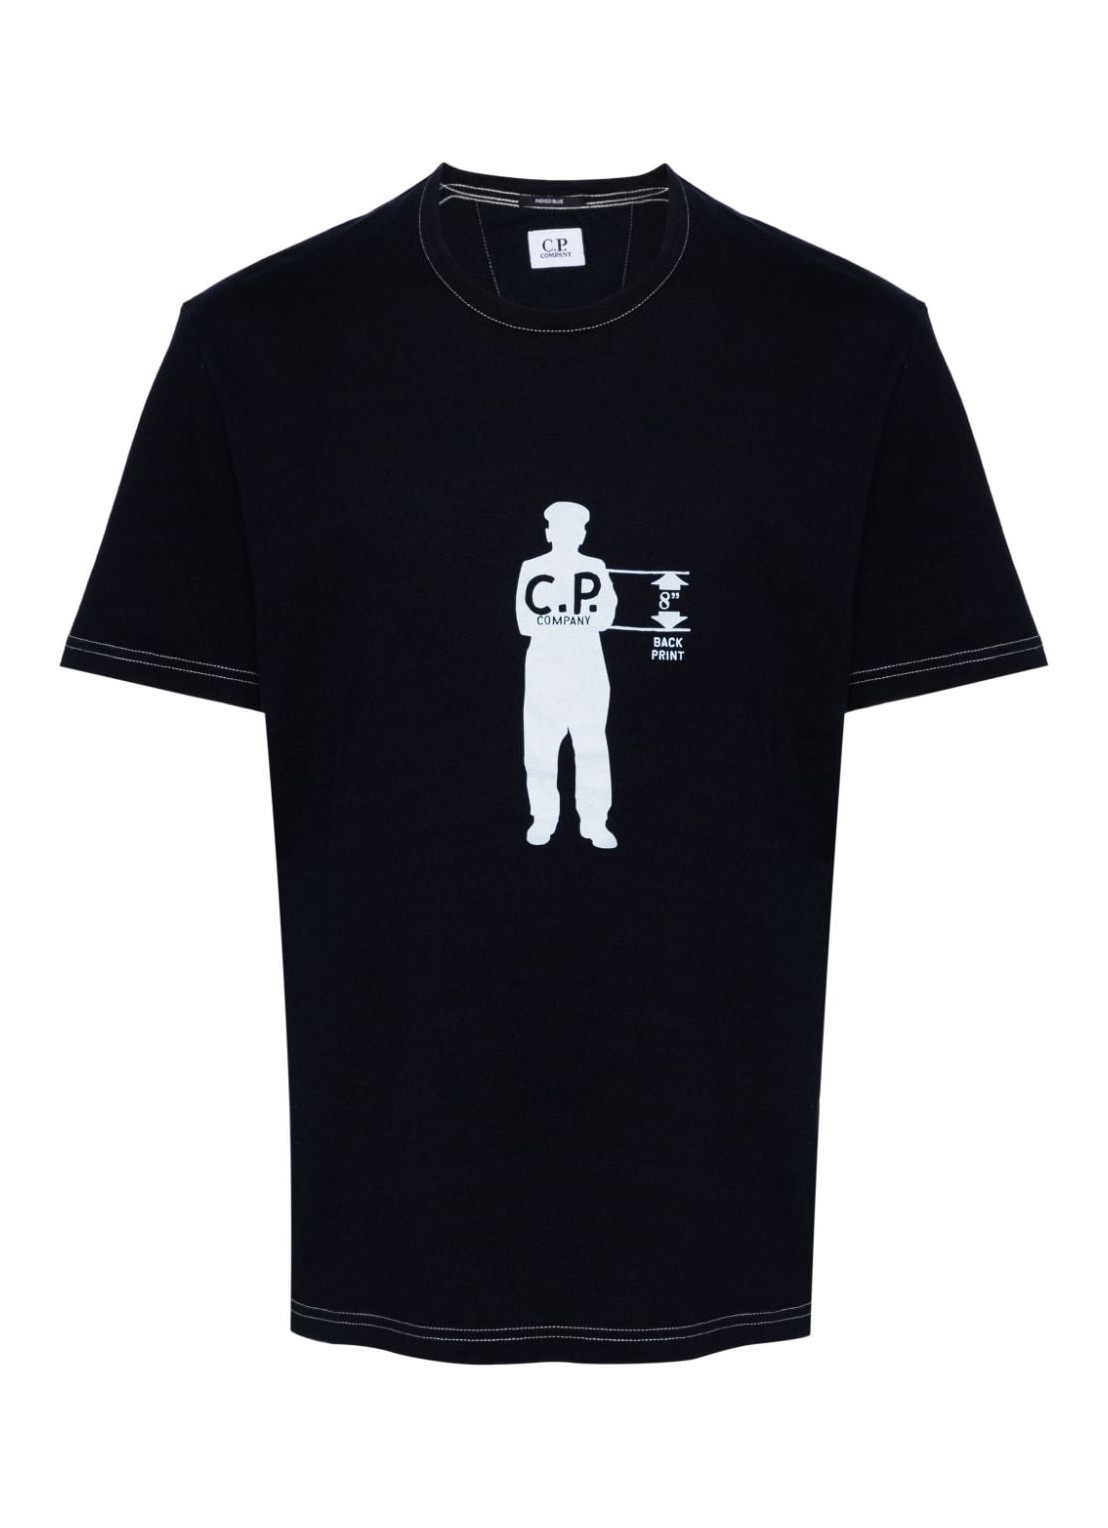 Camiseta c.p.company t-shirt manindigo jersey t-shirt - 16cmts171a110056w d08 talla XL
 